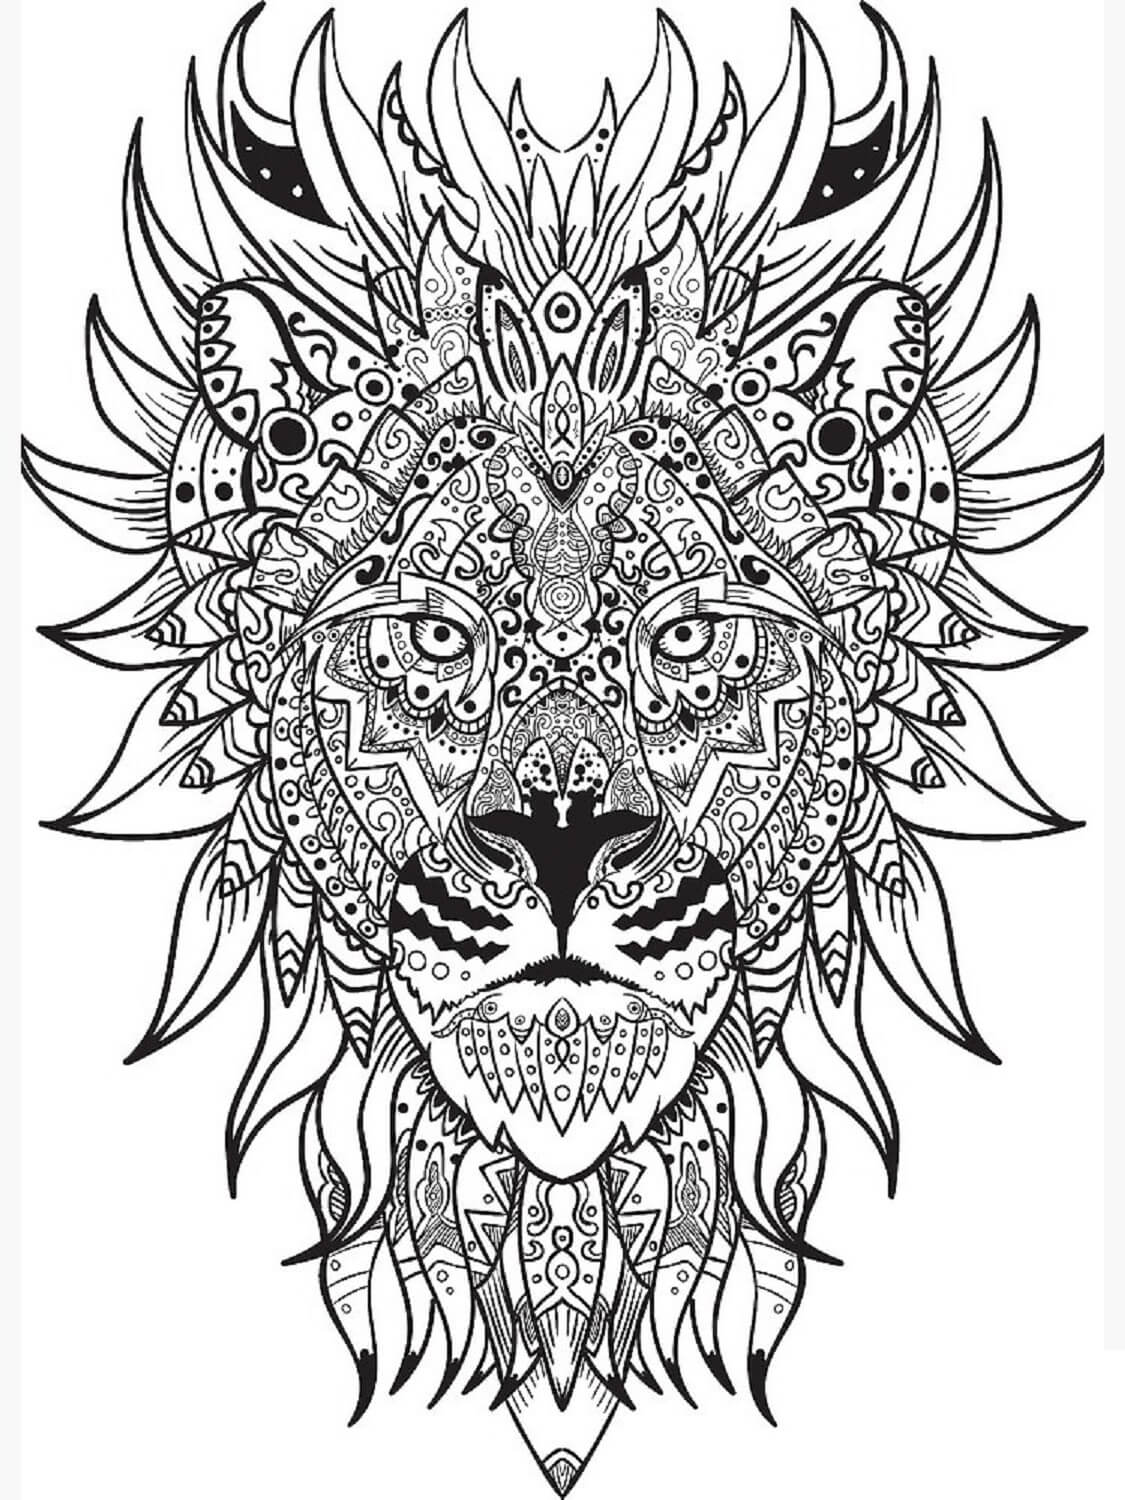 Mandala Lion Coloring Page – Sheet 11 Mandalas